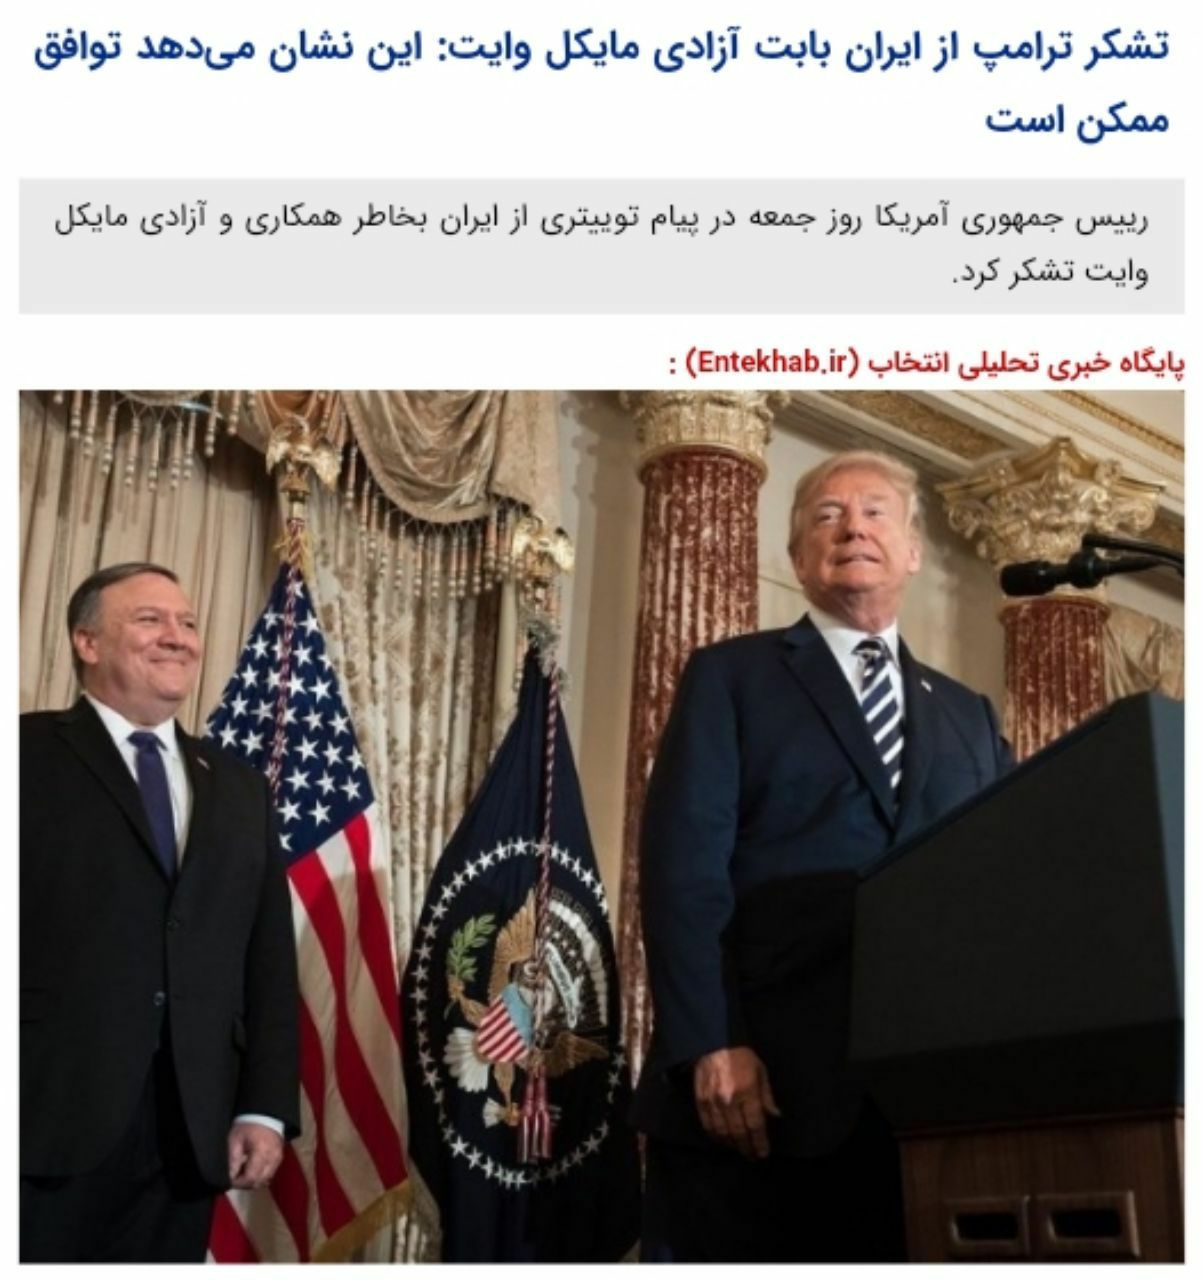 ️تشکر ترامپ از ایران بابت آزادی مایکل وایت:این نشان می‌دهد توافق ممکن است